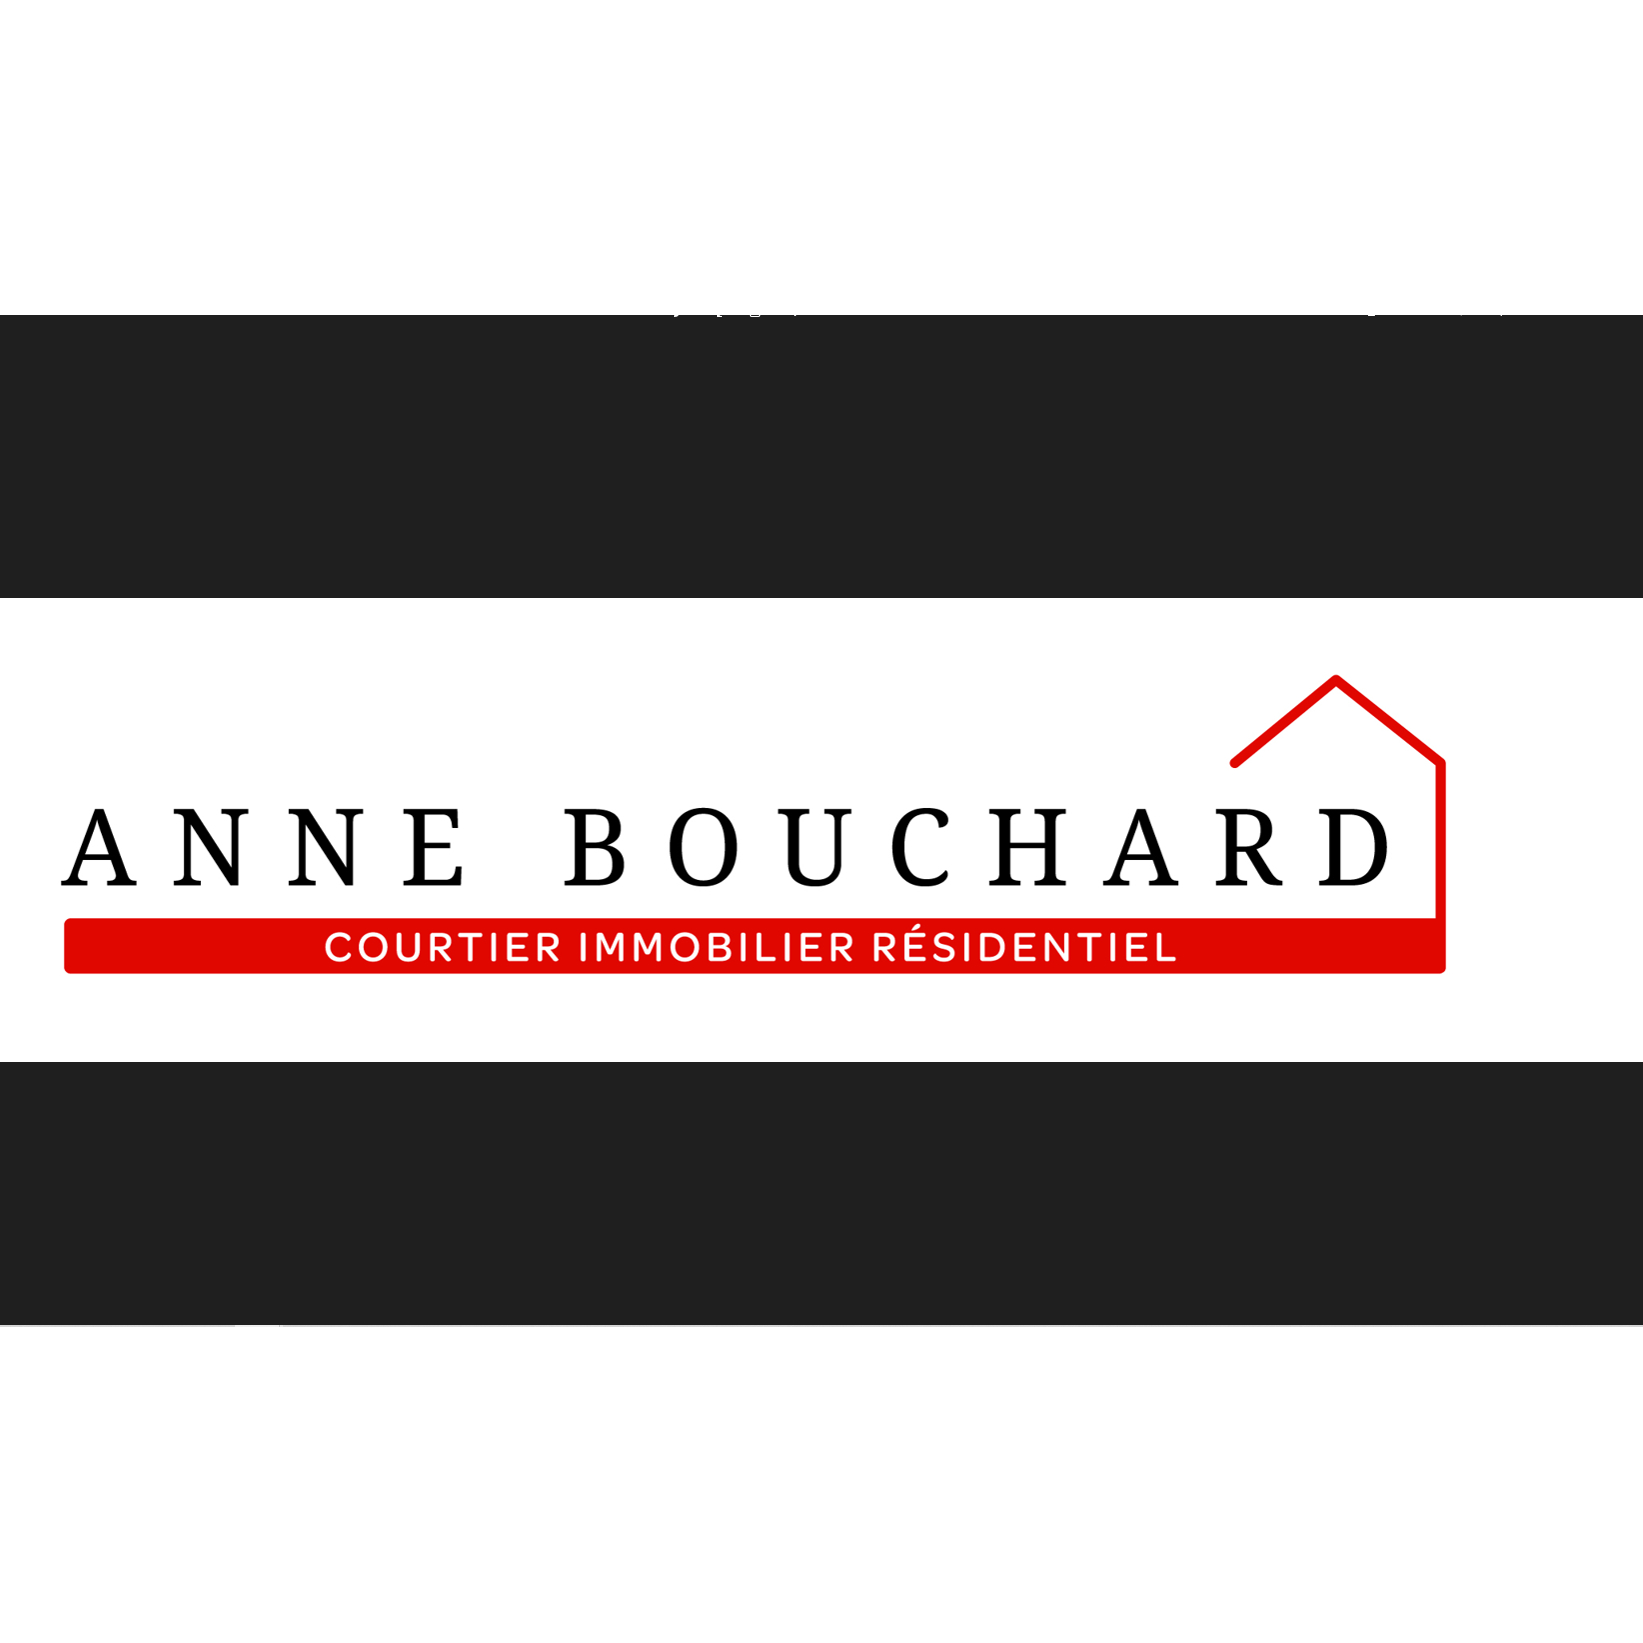 Anne Bouchard Courtier Immobilier Résidentiel - Courtiers immobiliers et agences immobilières